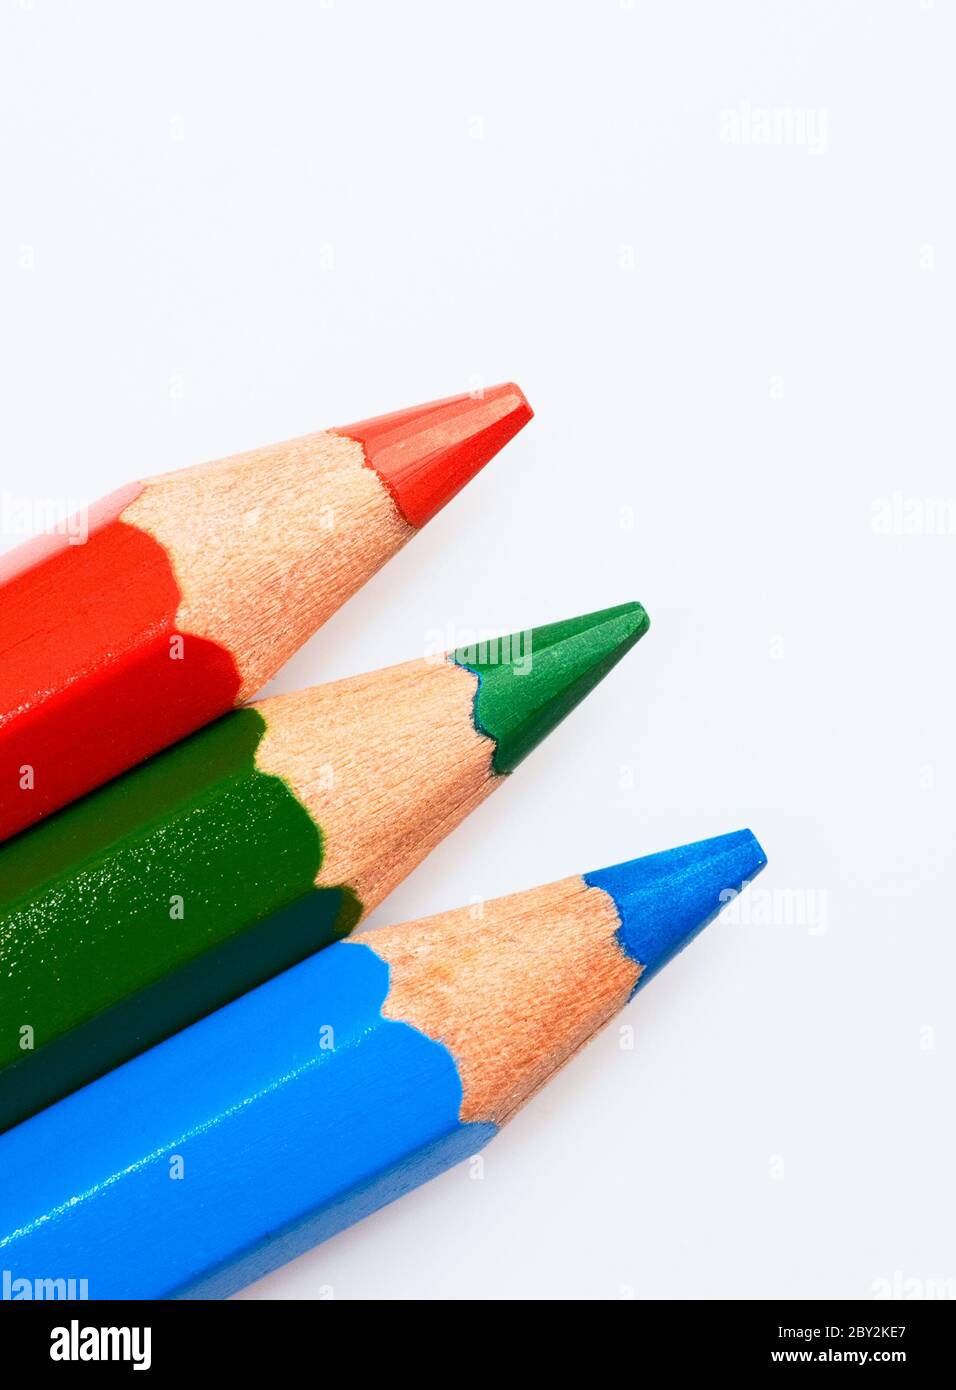 matite rosse, verdi e blu su sfondo bianco Foto stock - Alamy